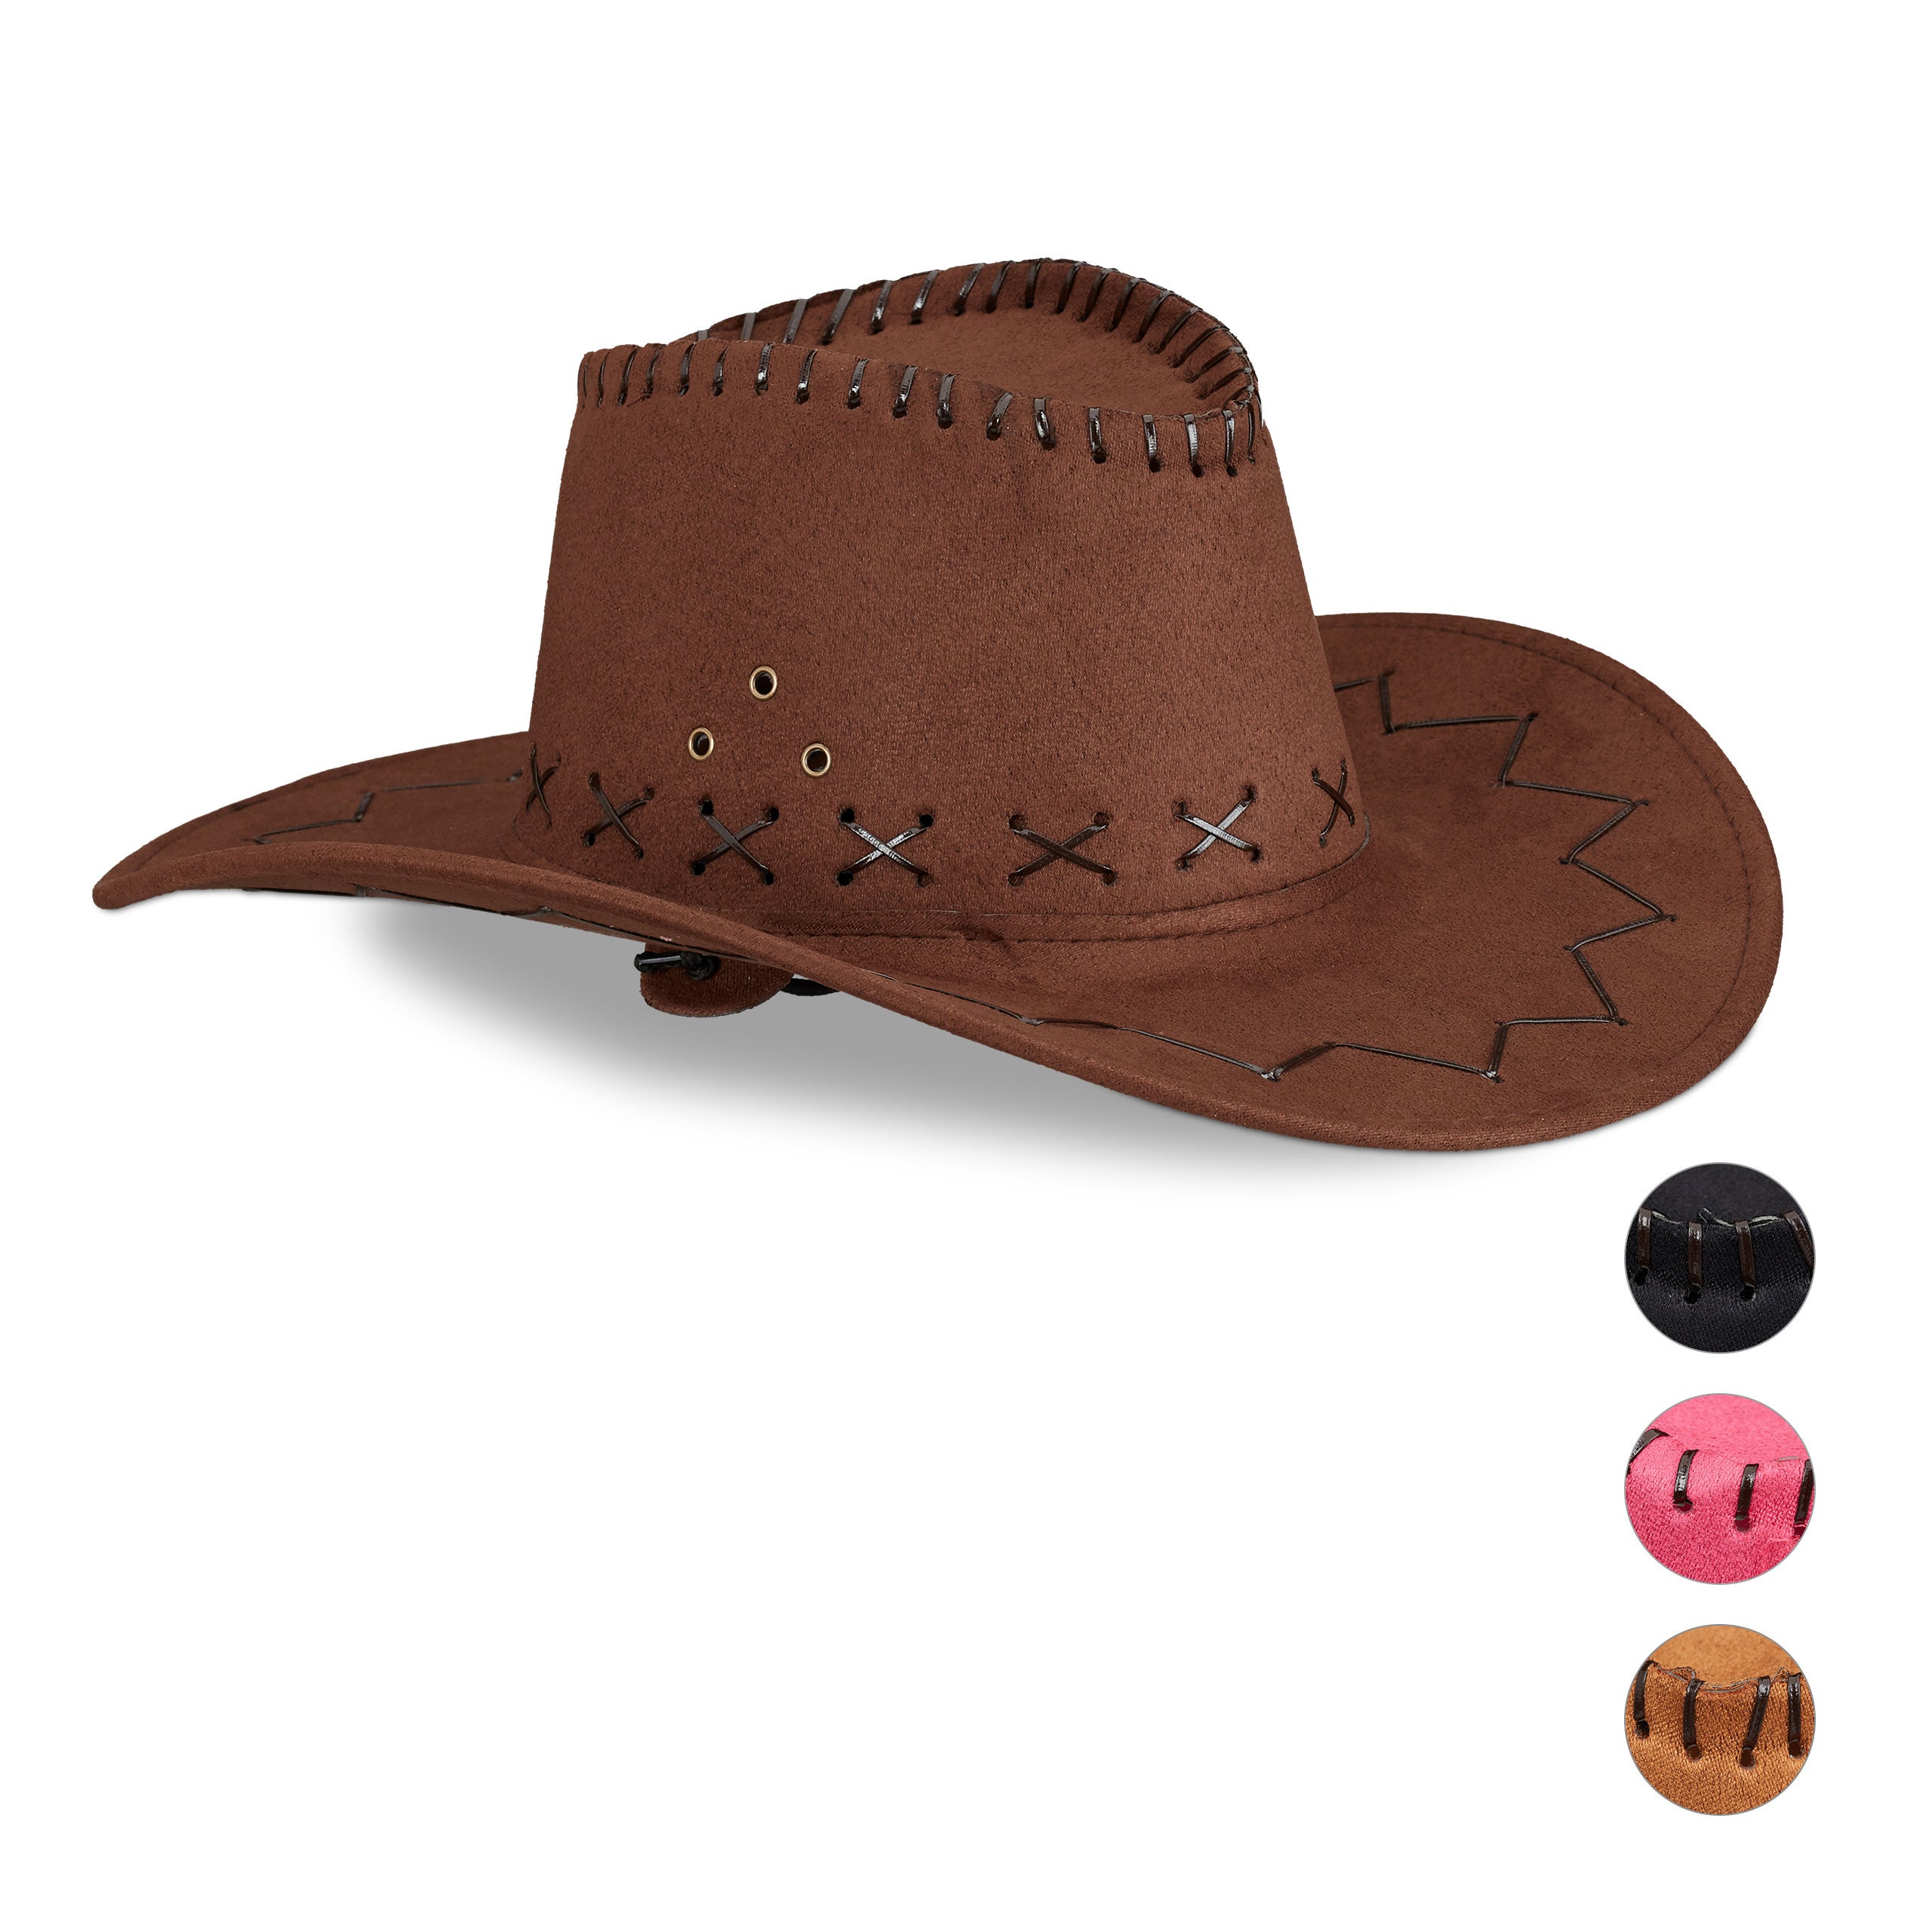 Cowboy Cowgirl Aussie Stile Cappello Cespuglio IN PELLE SCAMOSCIATA CAMEL Australiano Western Unisex 